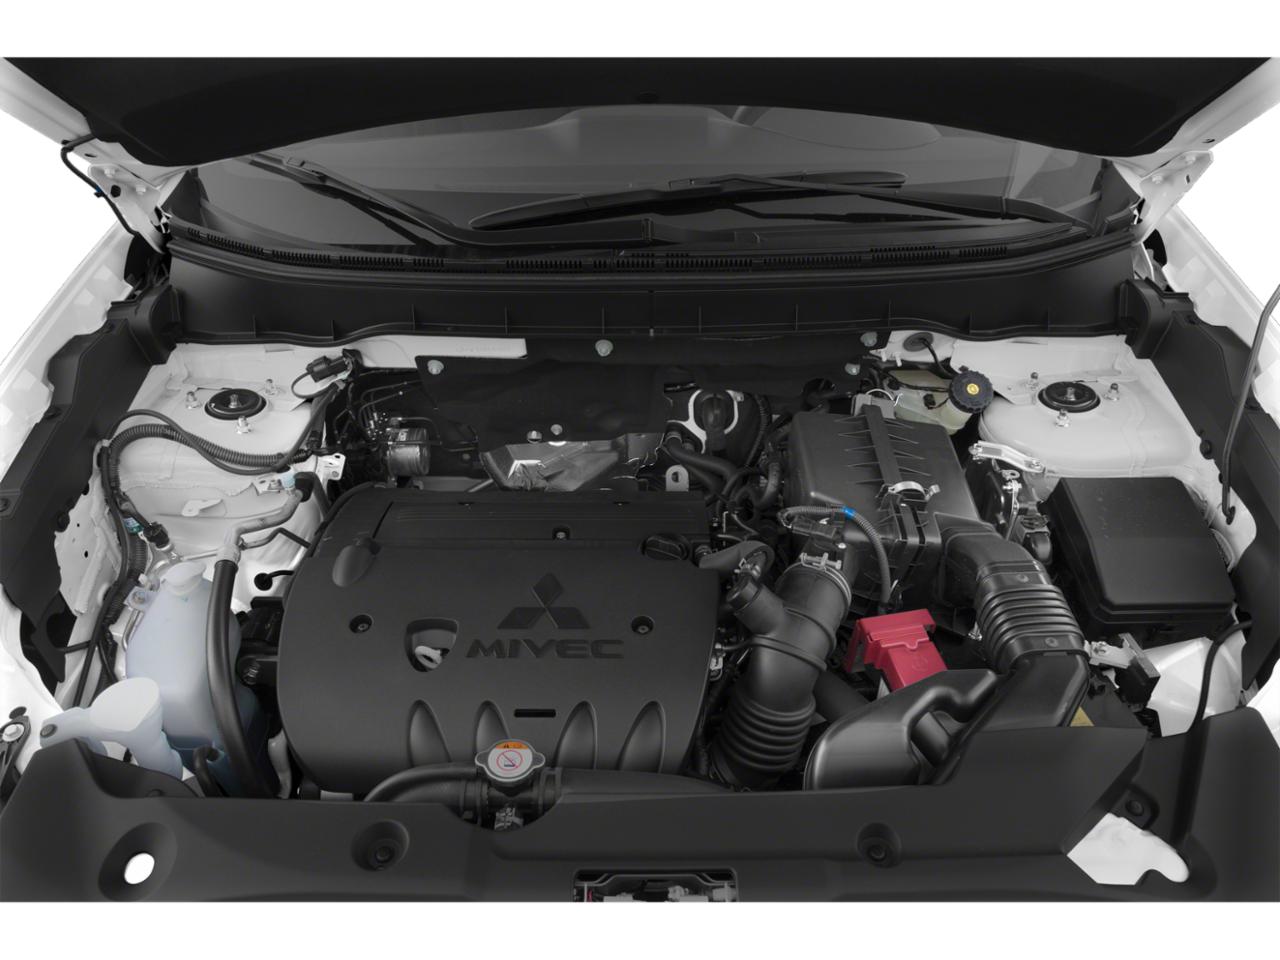 Мицубиси аутлендер двигатель 2. Мицубиси АСХ двигатель 2.0. Двигатель Mitsubishi ASX 1.6 2013. Двигатель Мицубиси АСХ 1.6. Митсубиси АСХ двигатель 2.